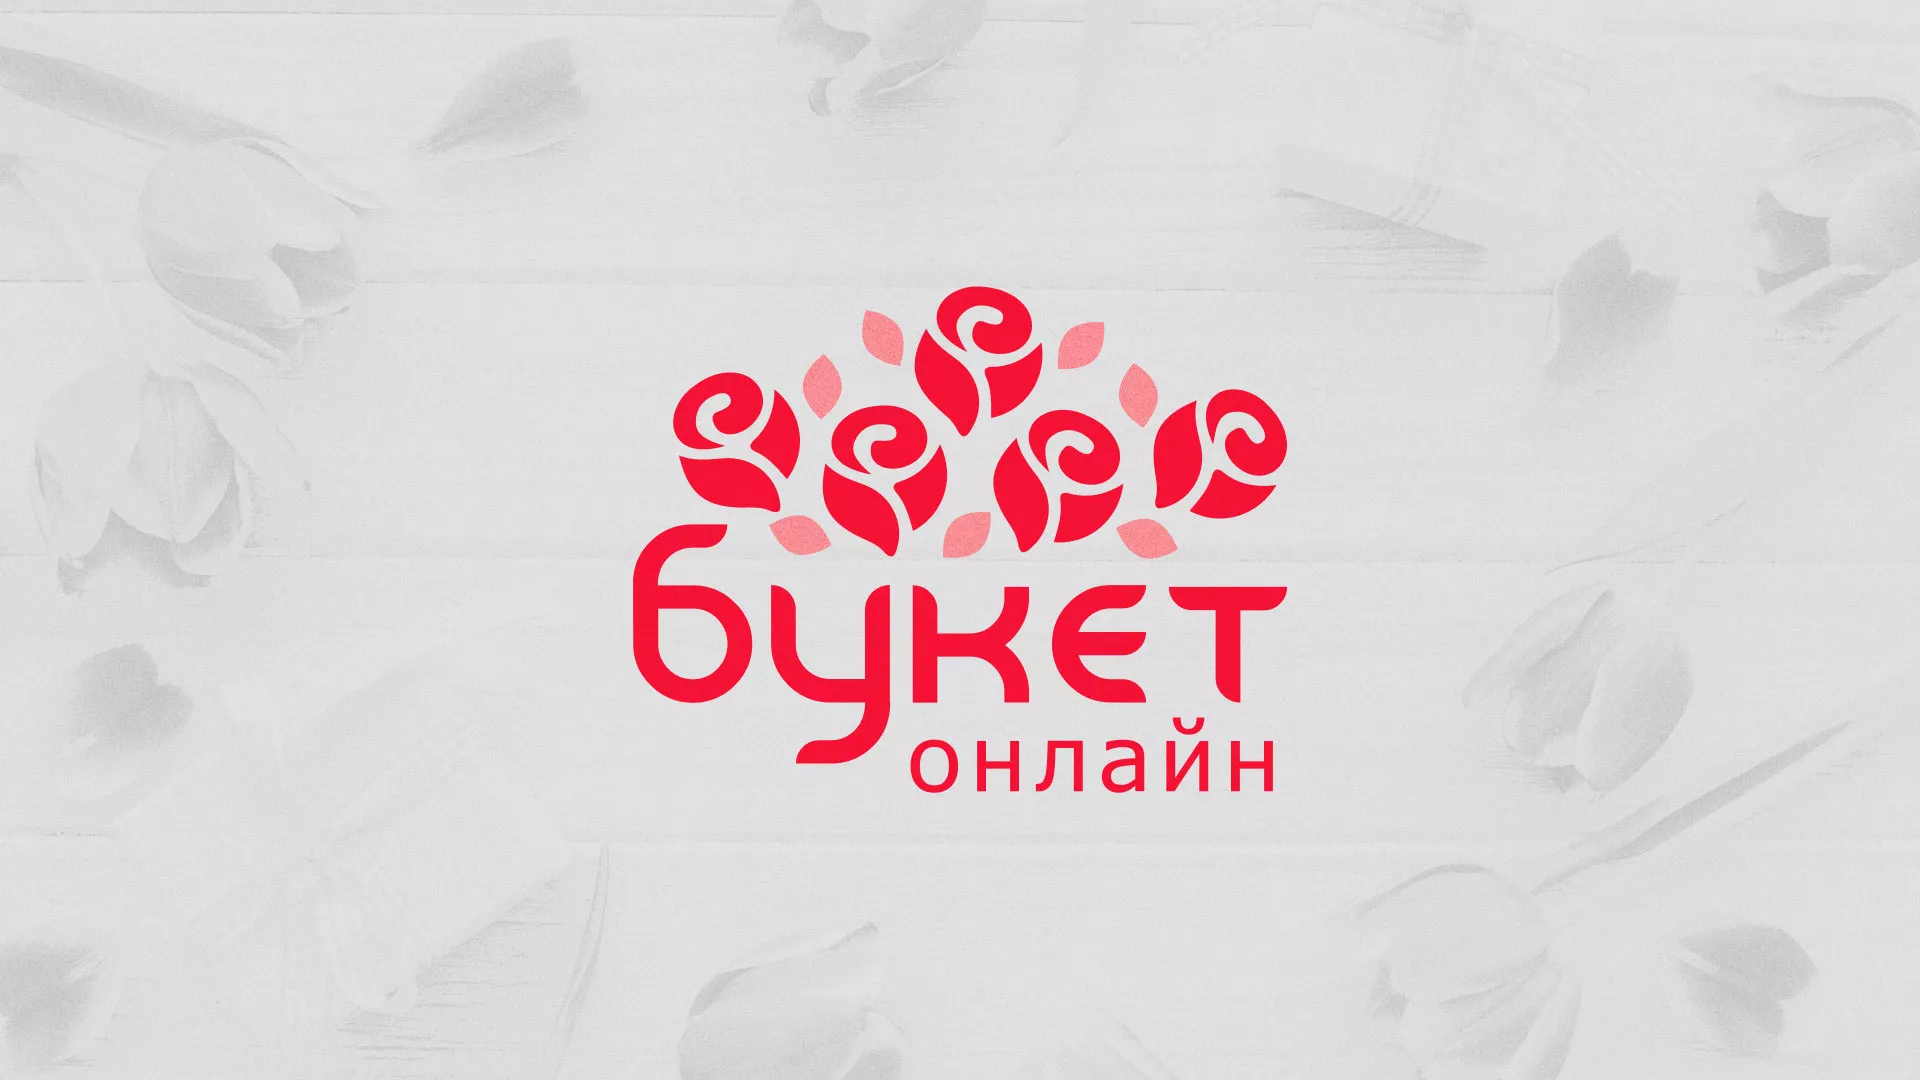 Создание интернет-магазина «Букет-онлайн» по цветам в Димитровграде